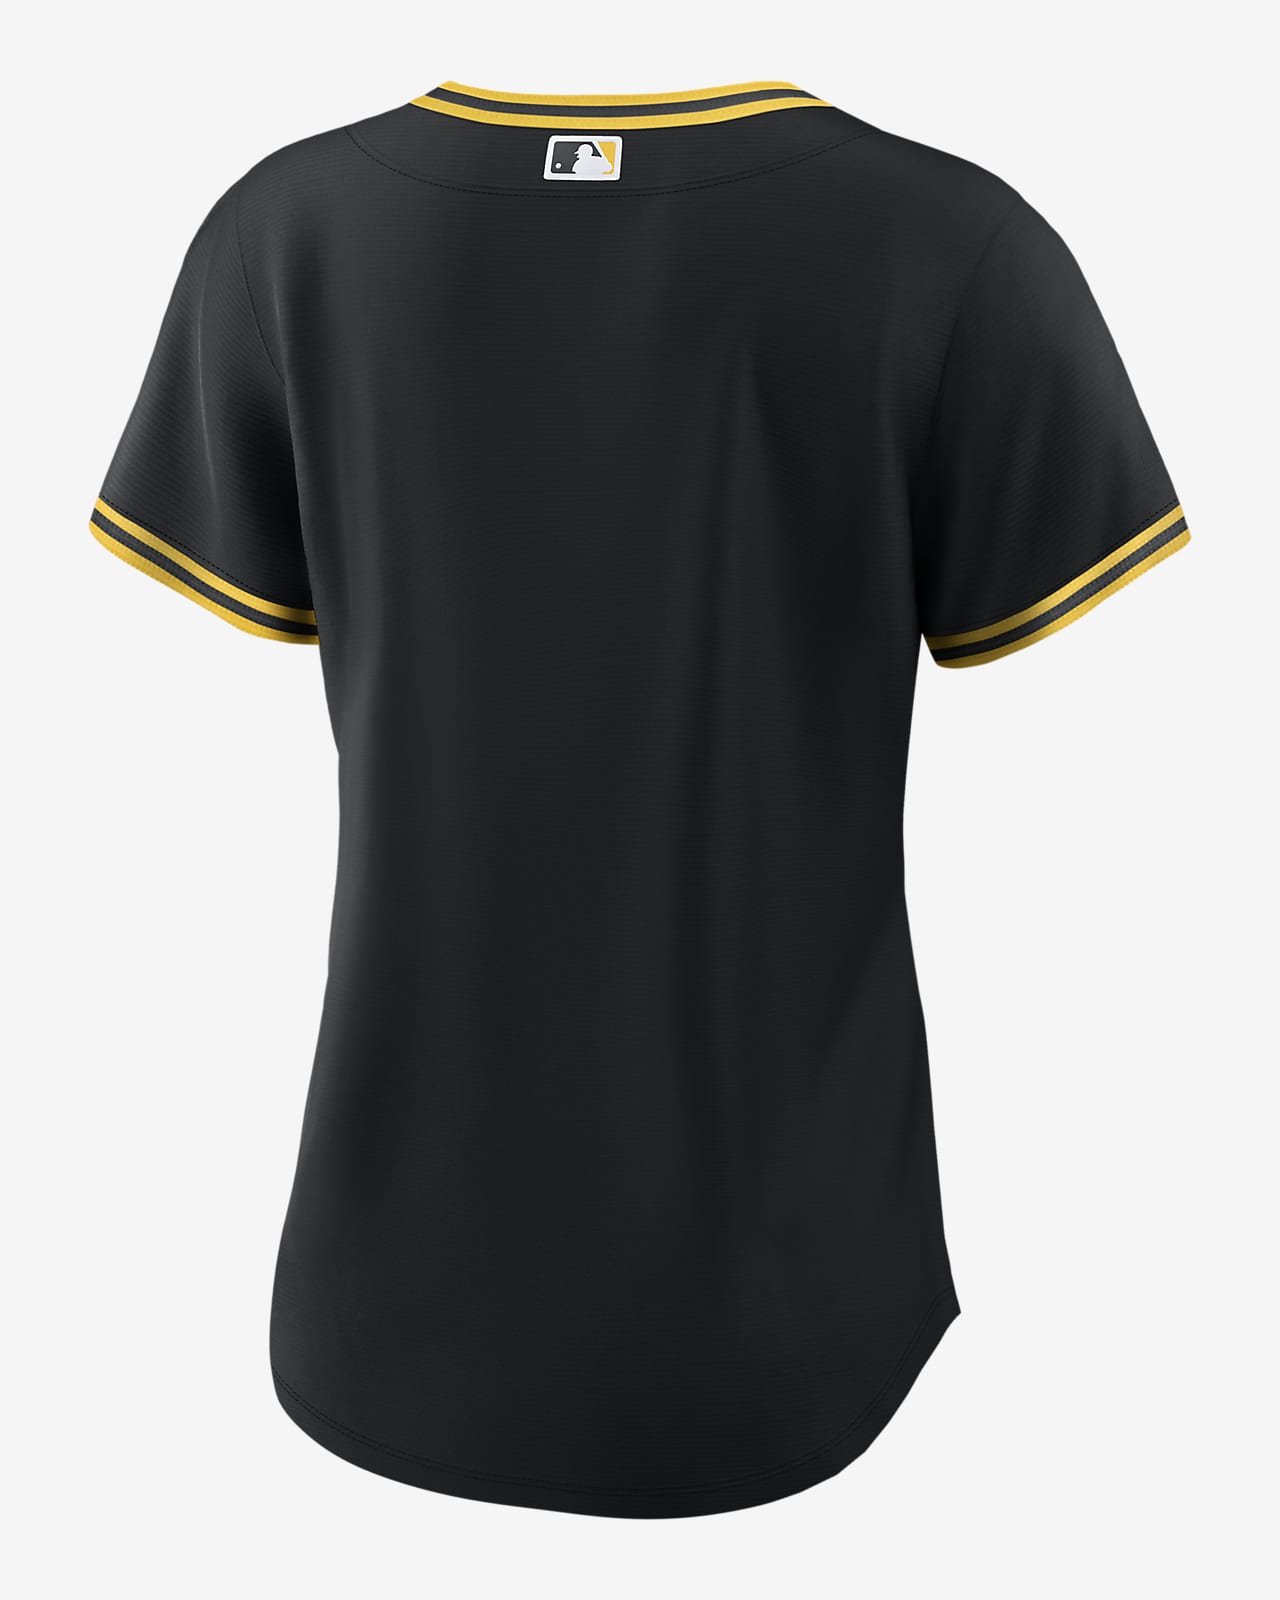 VINTAGE Lee Sport pittsburgh pirates cotton jersey button up black gray MLB  SZ M